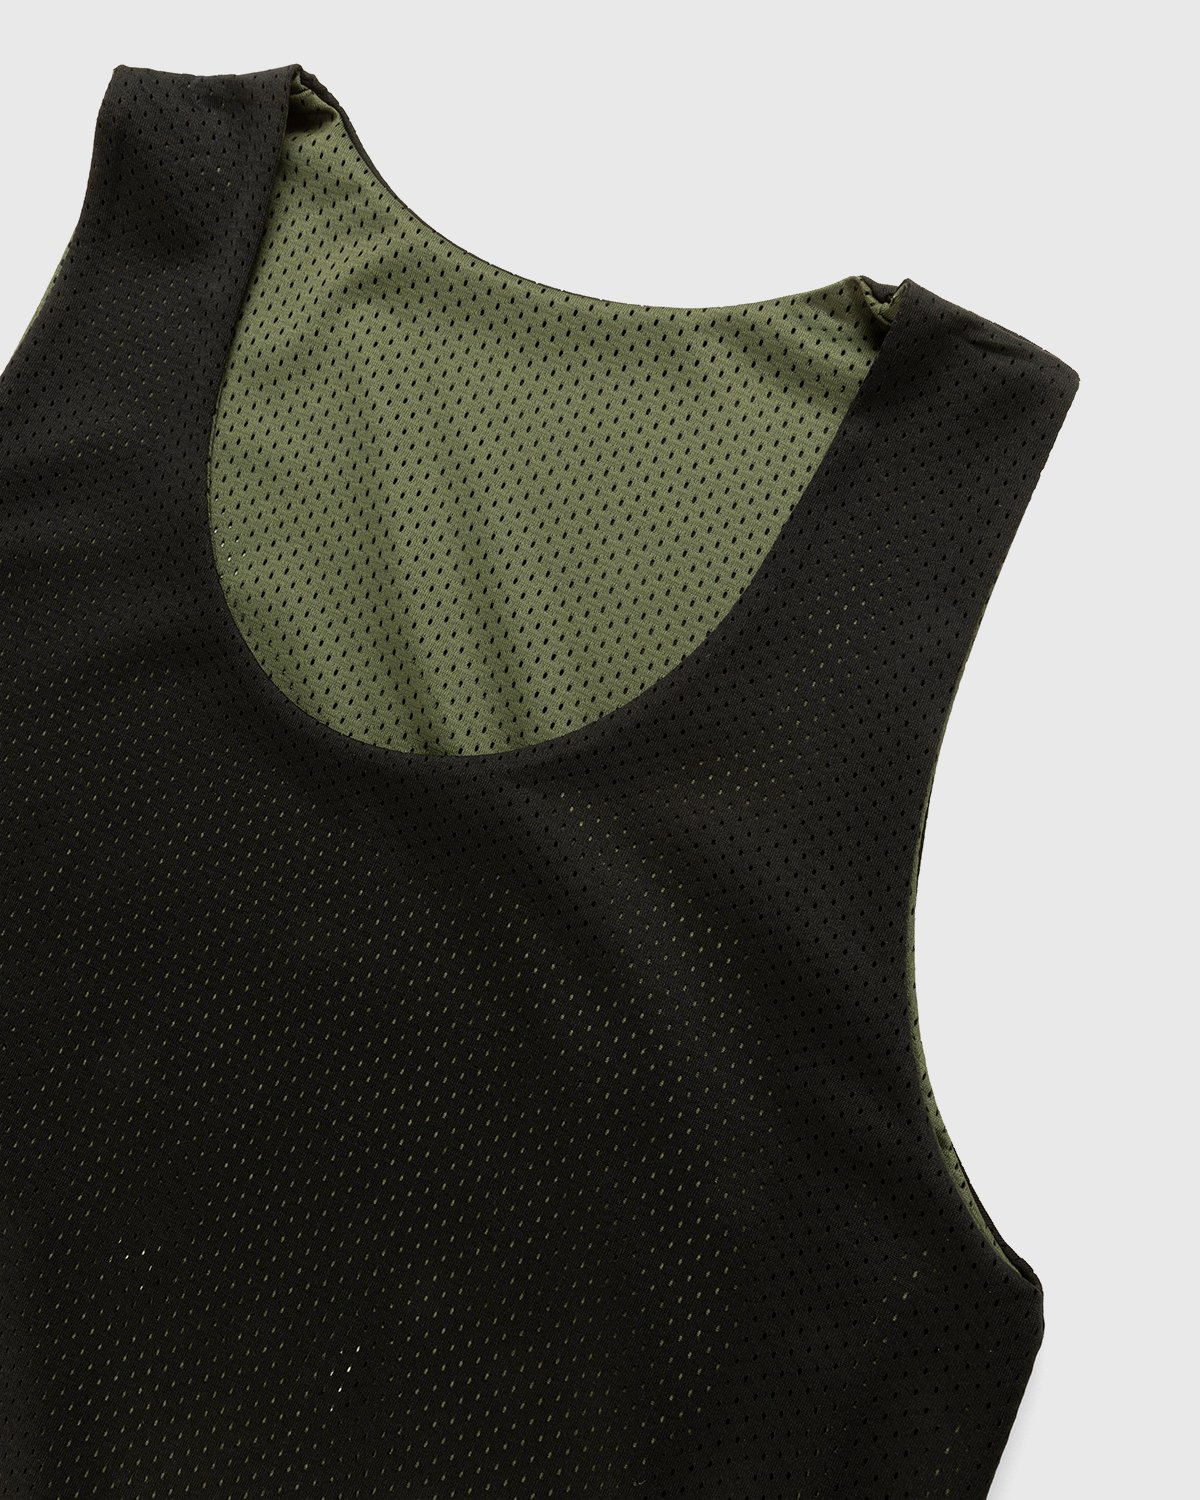 Highsnobiety - HS Sports Reversible Mesh Tank Top Black/Khaki - Clothing - Green - Image 4